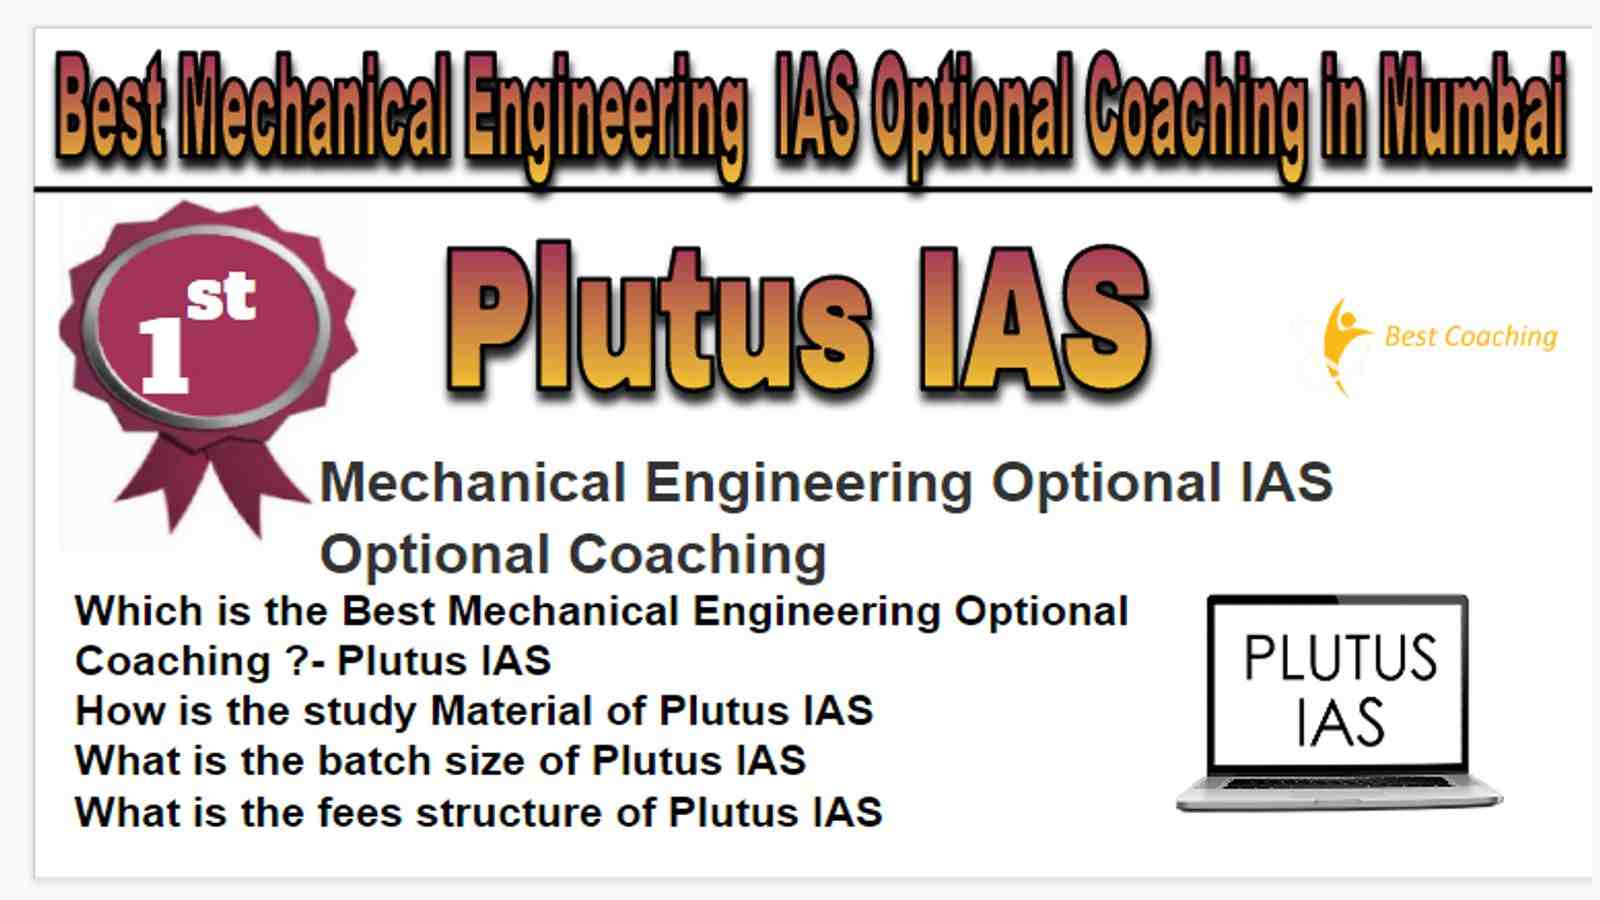 Rank 1 Best Mechanical Engineering Optional IAS Coaching in Mumbai